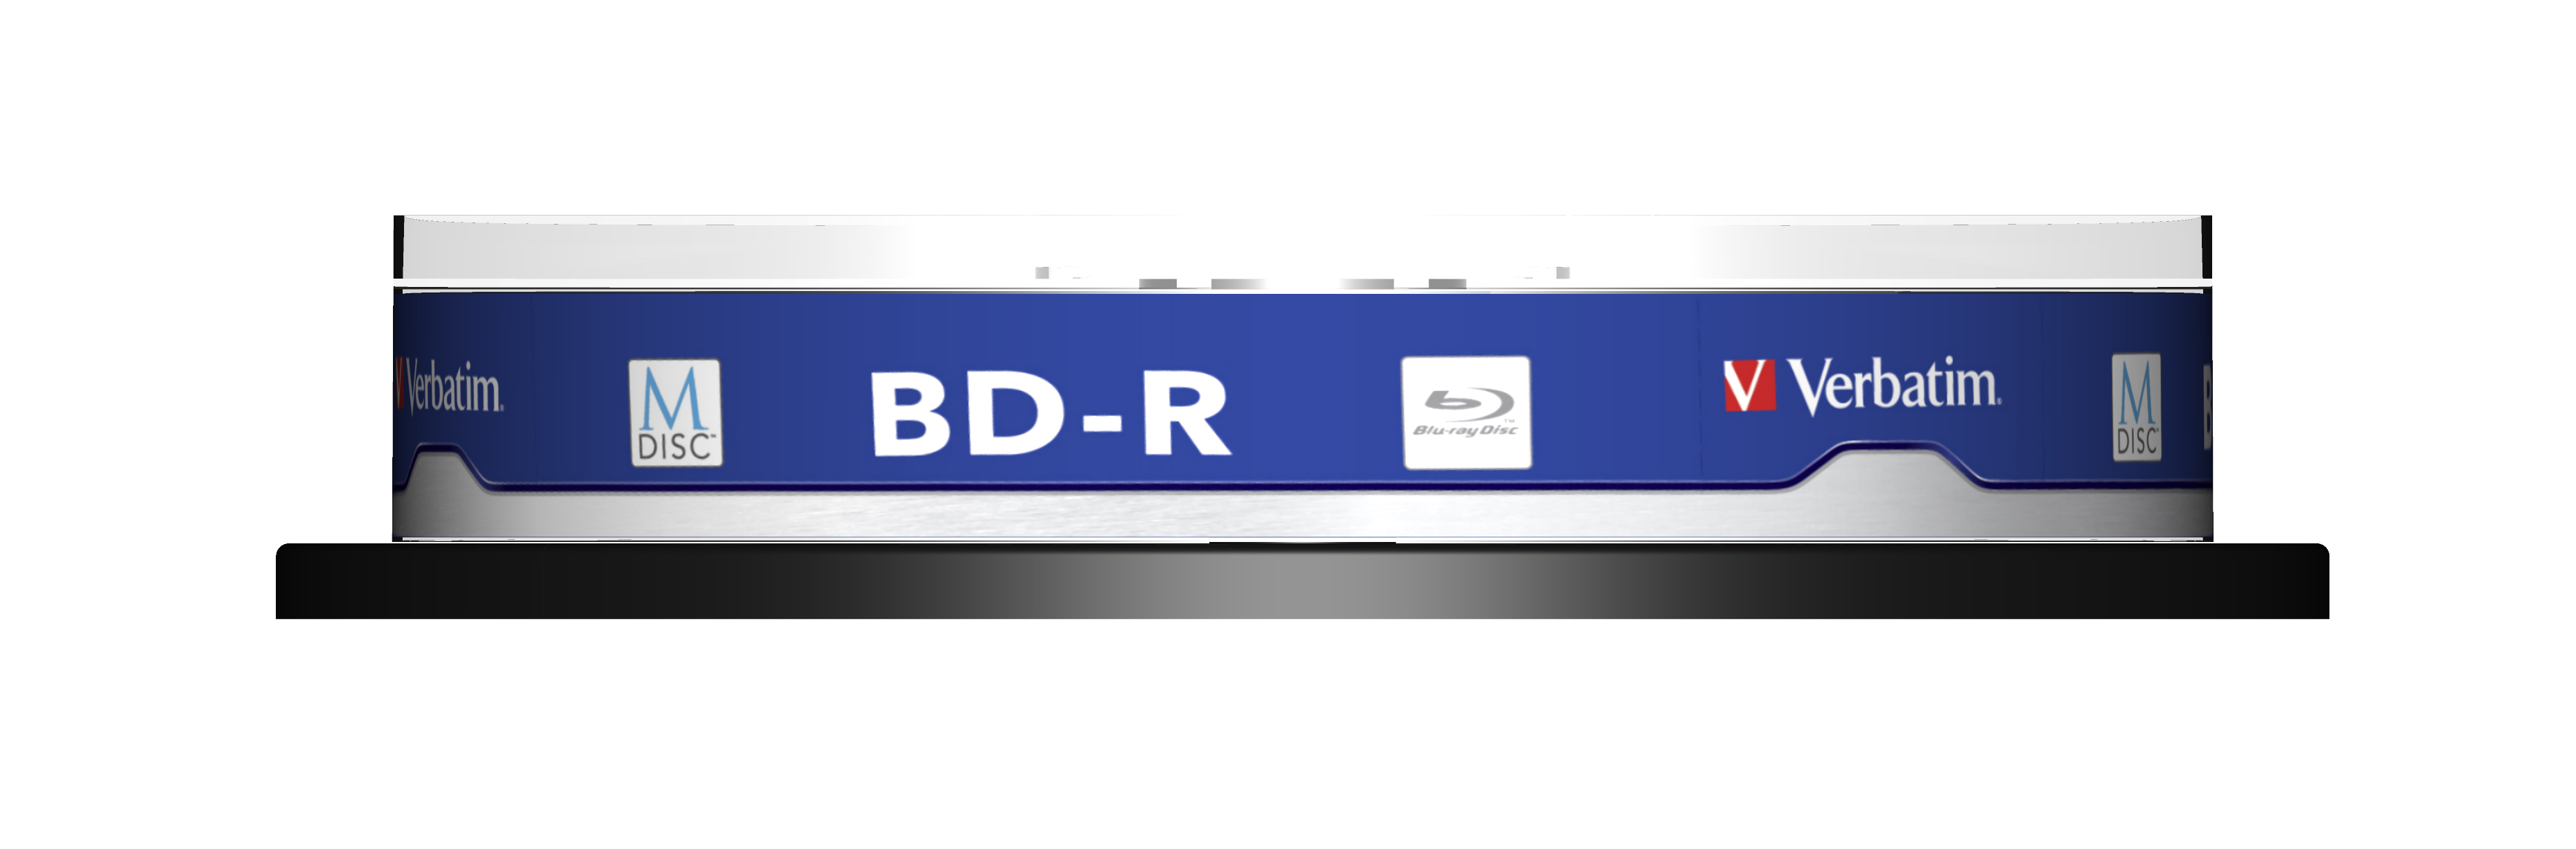 Verbatim M-DISC BD-R 25GB 4x10pk Spindle 43825 - CMS01